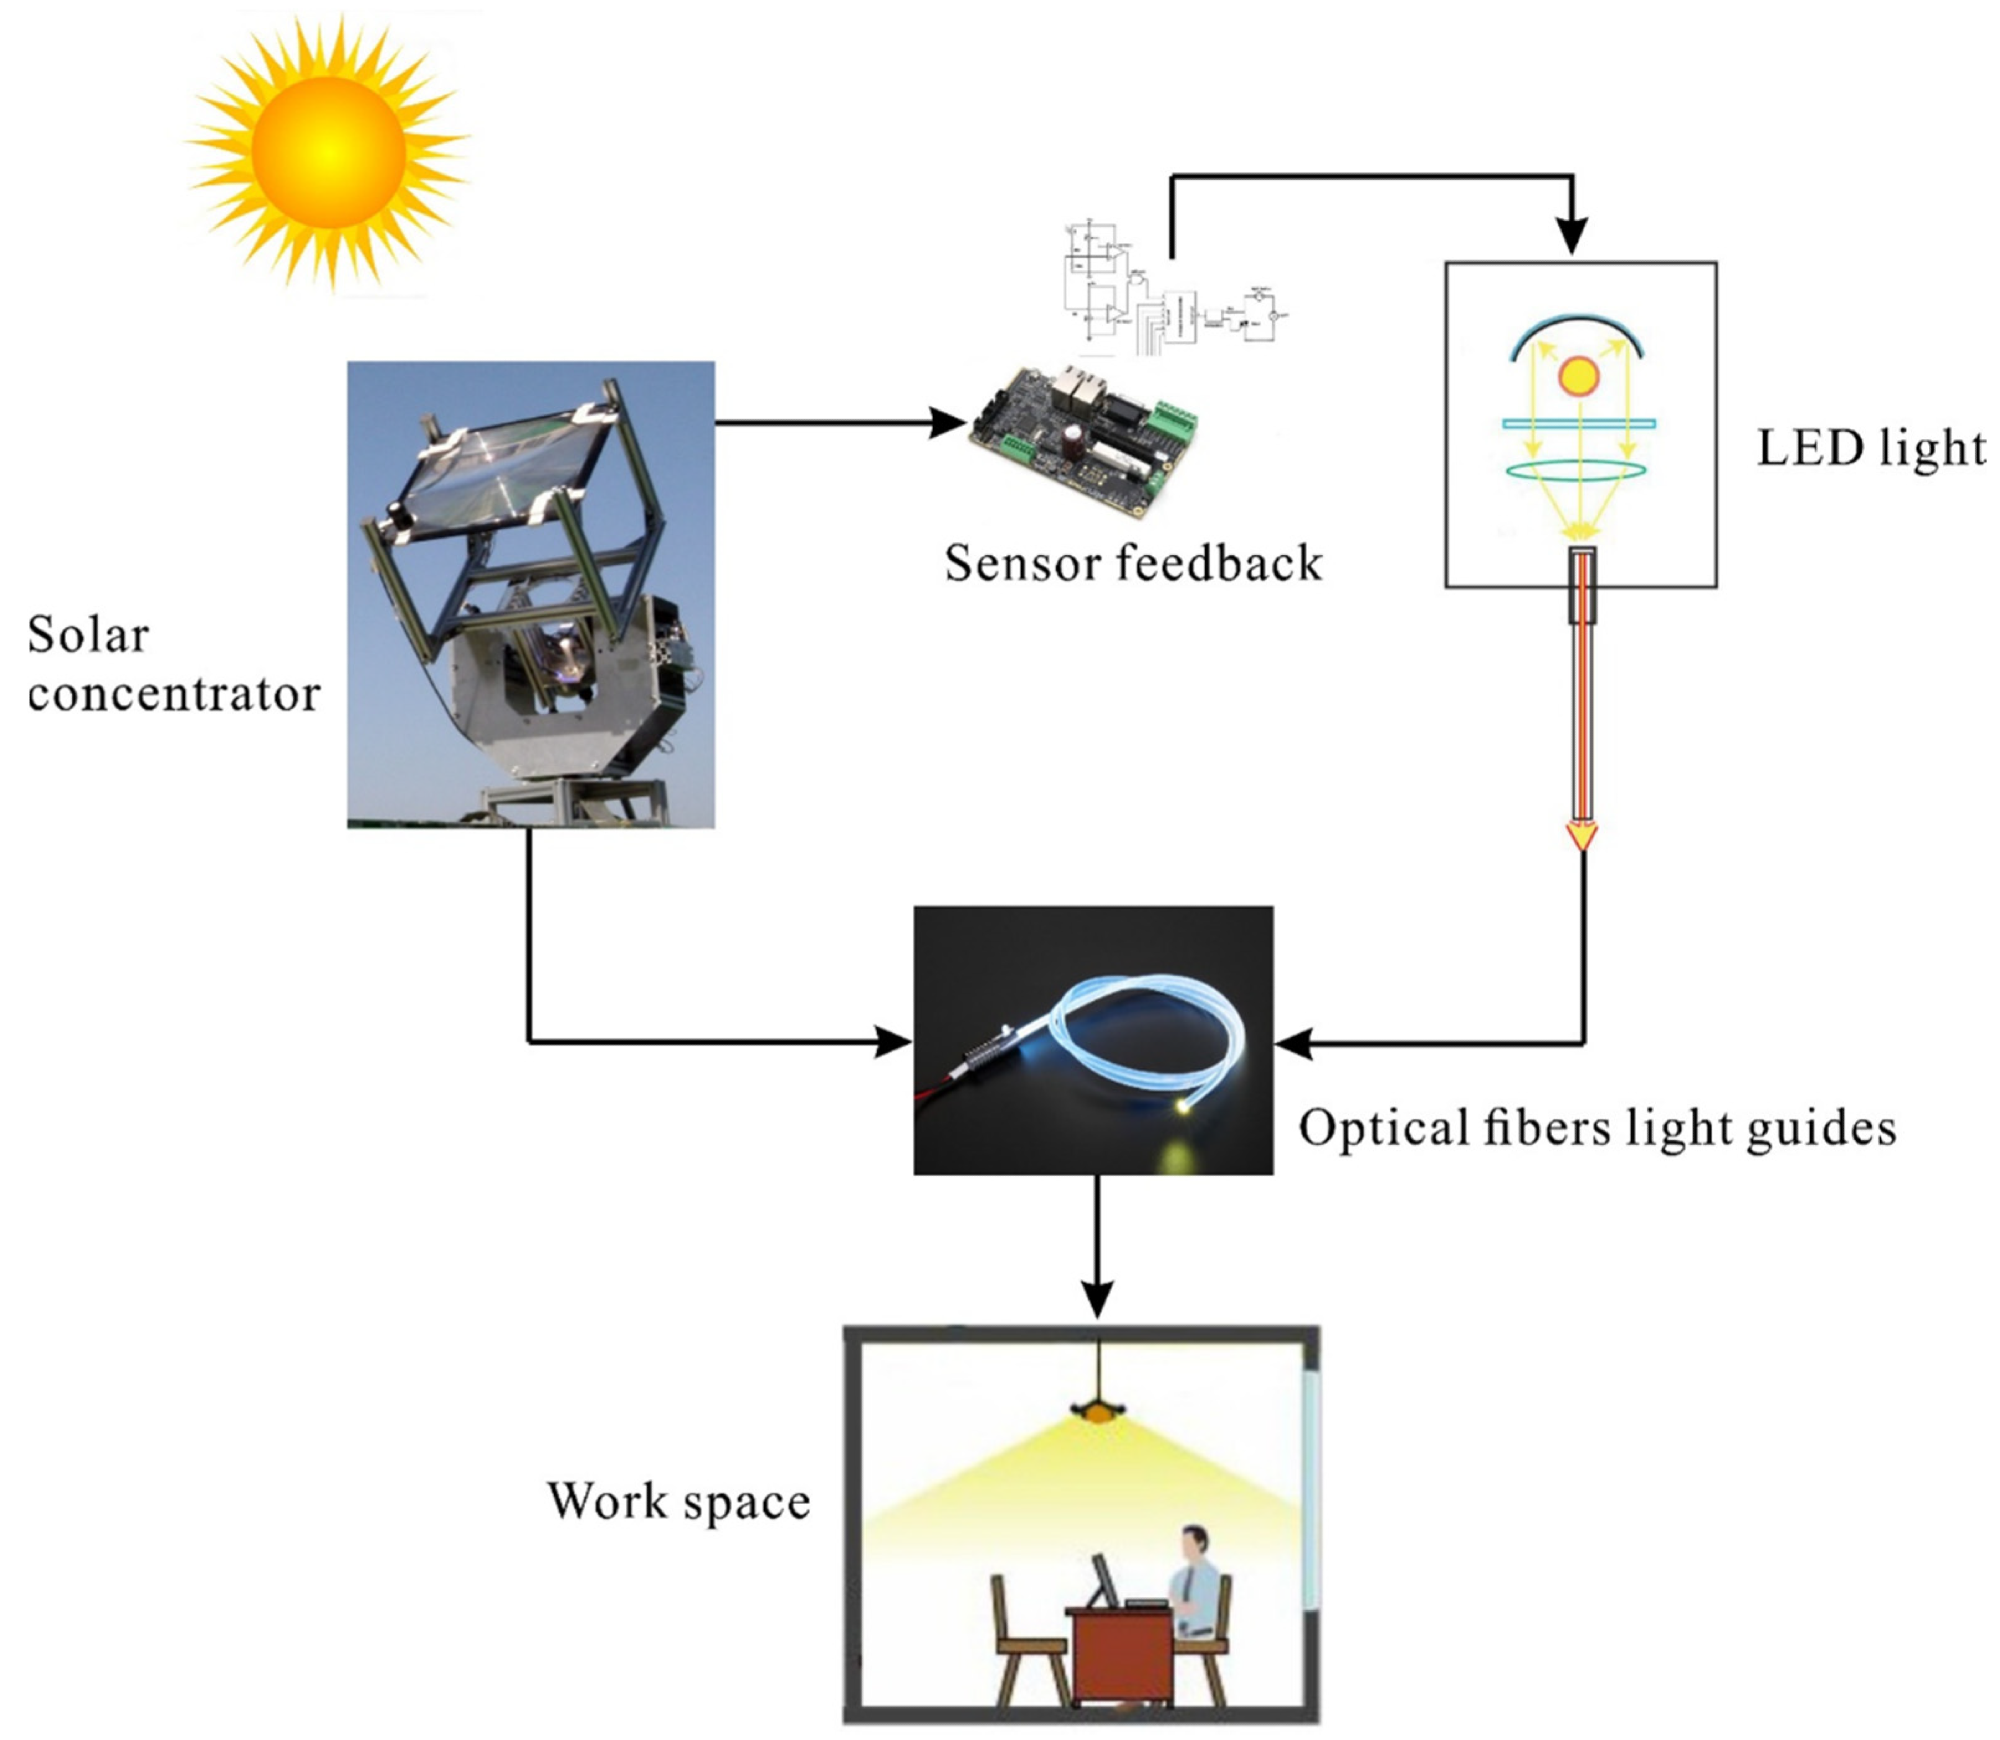 Schematics of the hybrid lighting system.